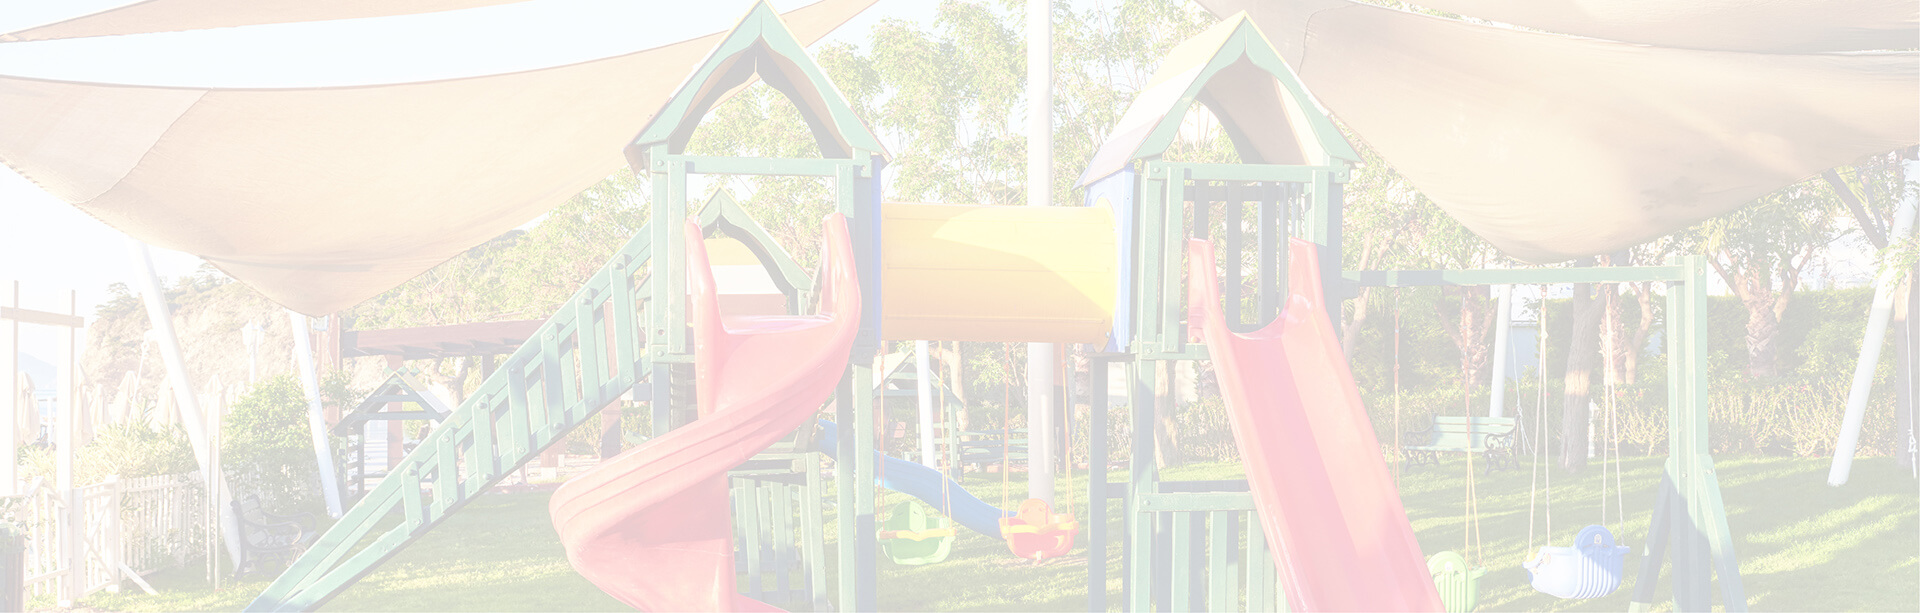 banner Toys / Playground